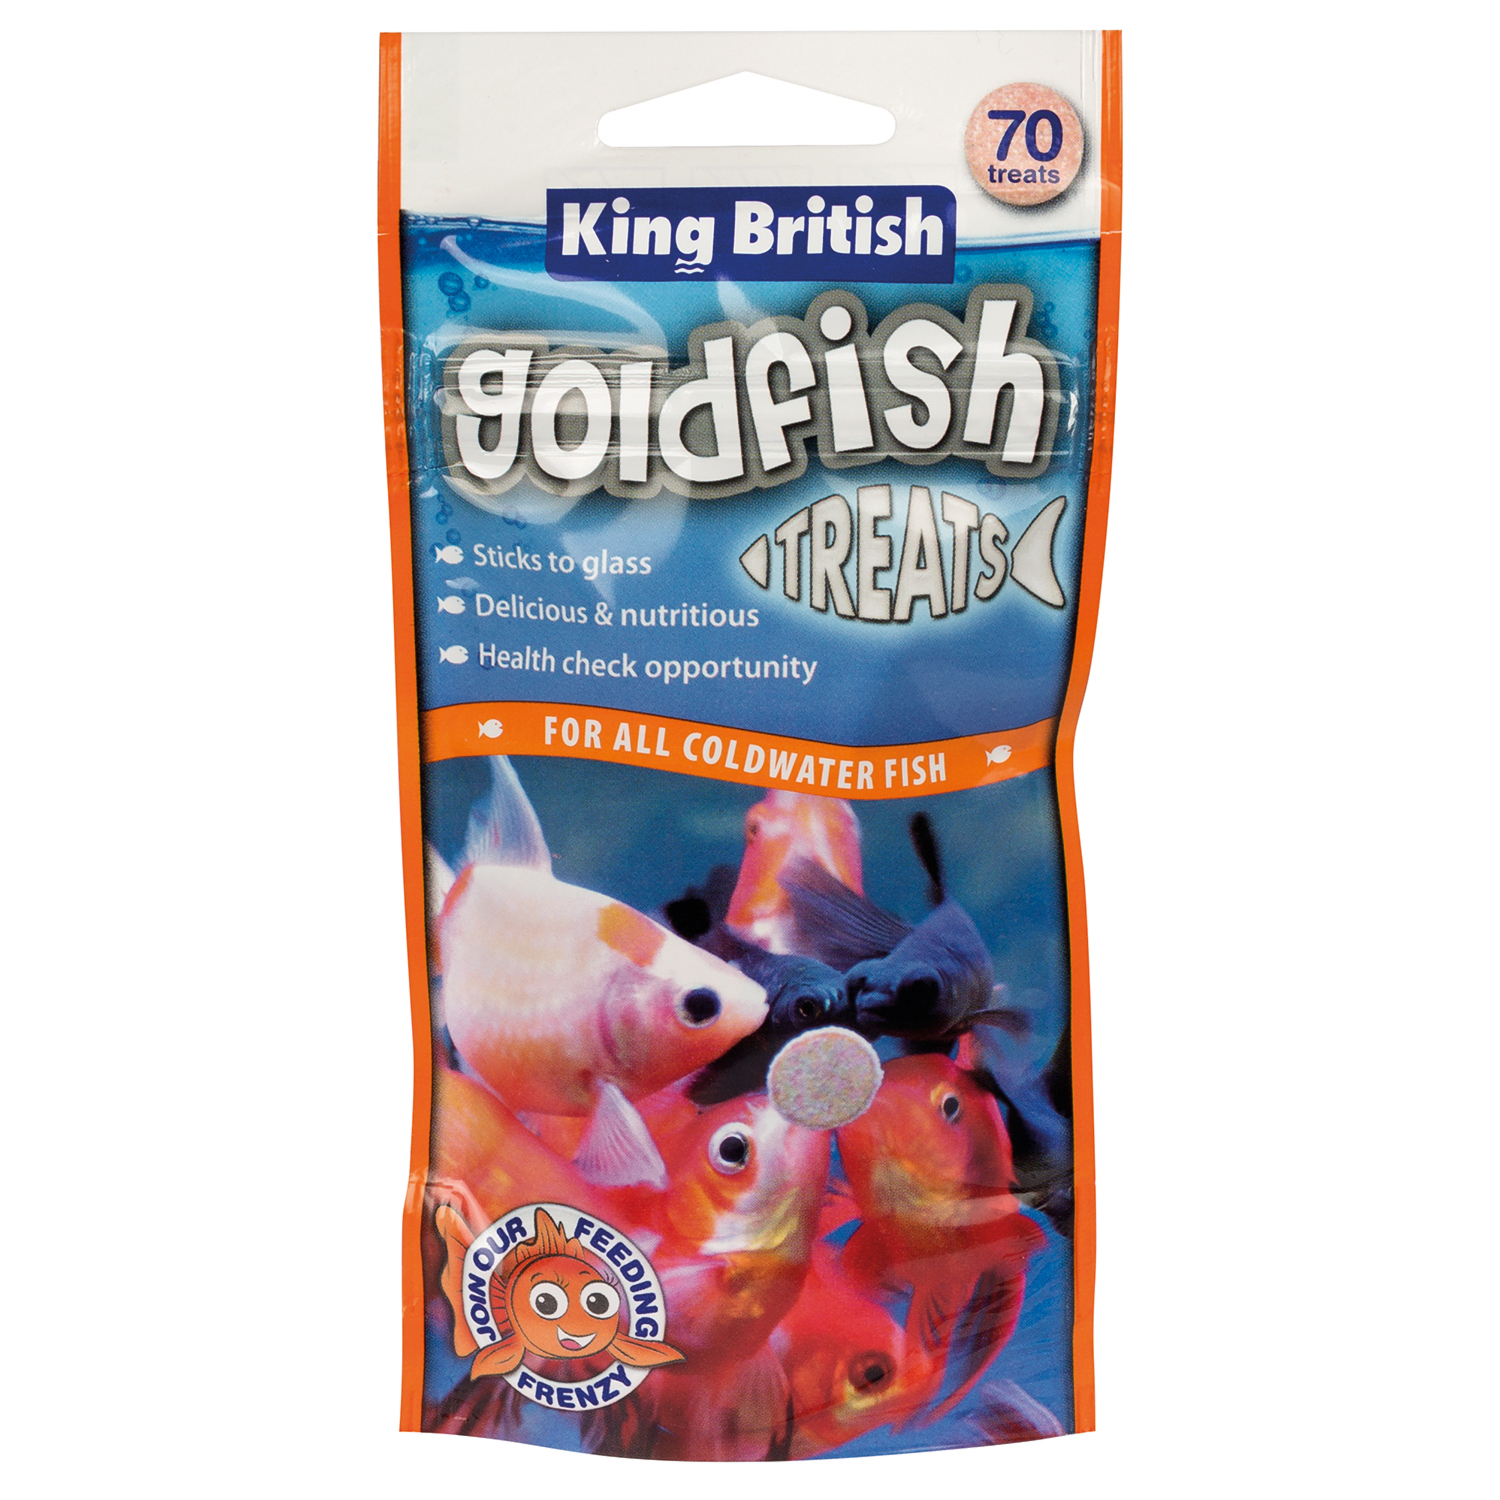 King British Goldfish Treats Image